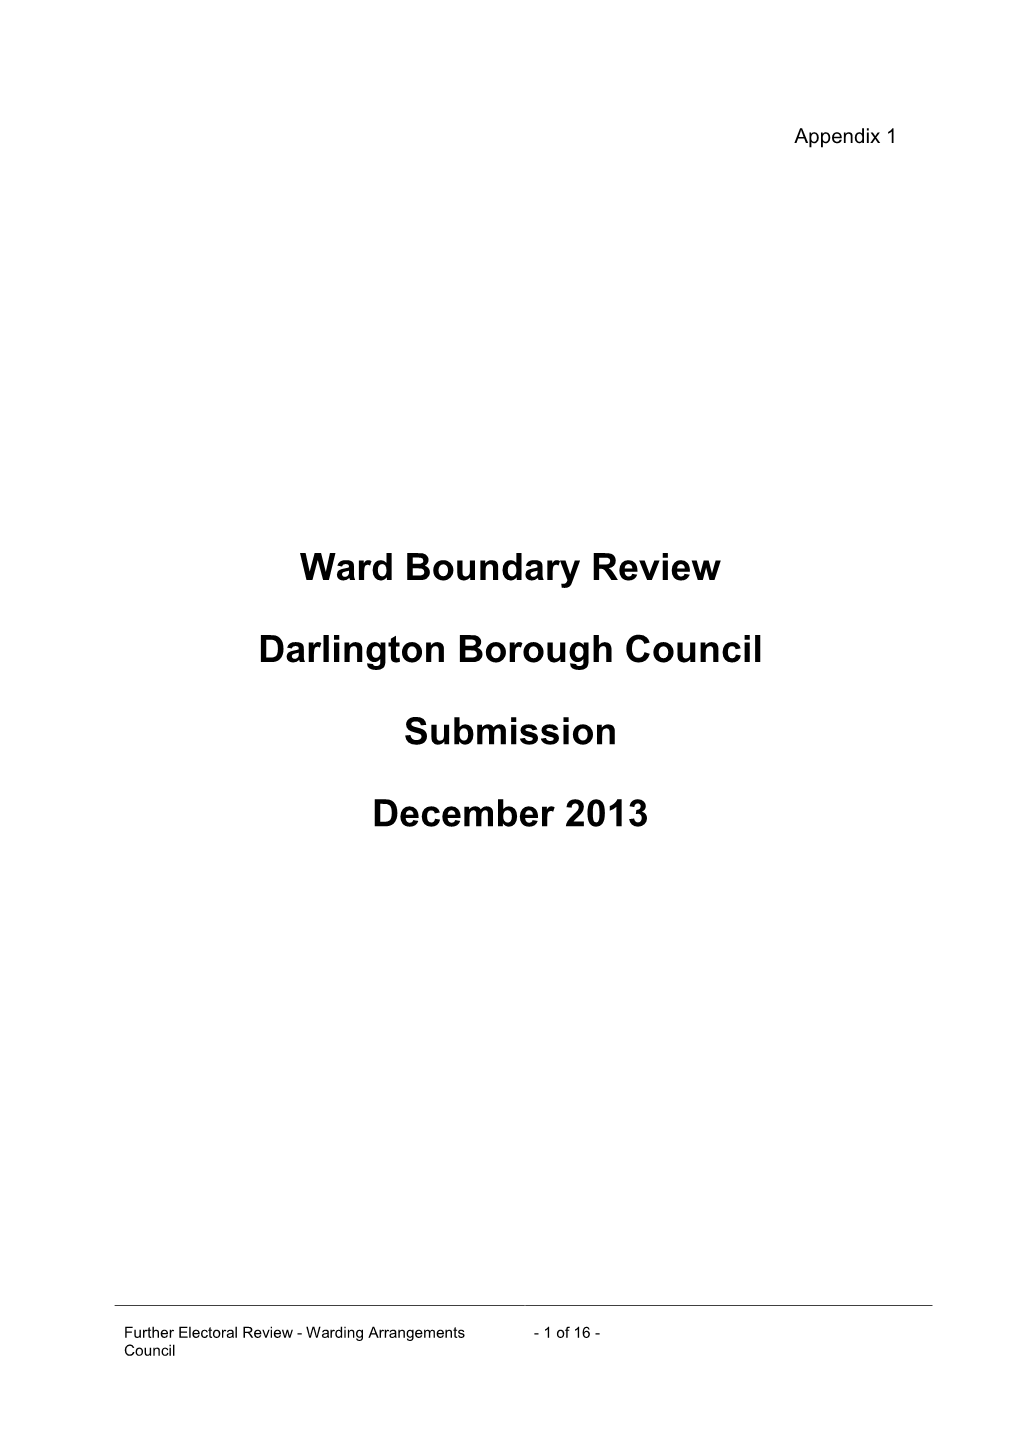 Ward Boundary Review Darlington Borough Council